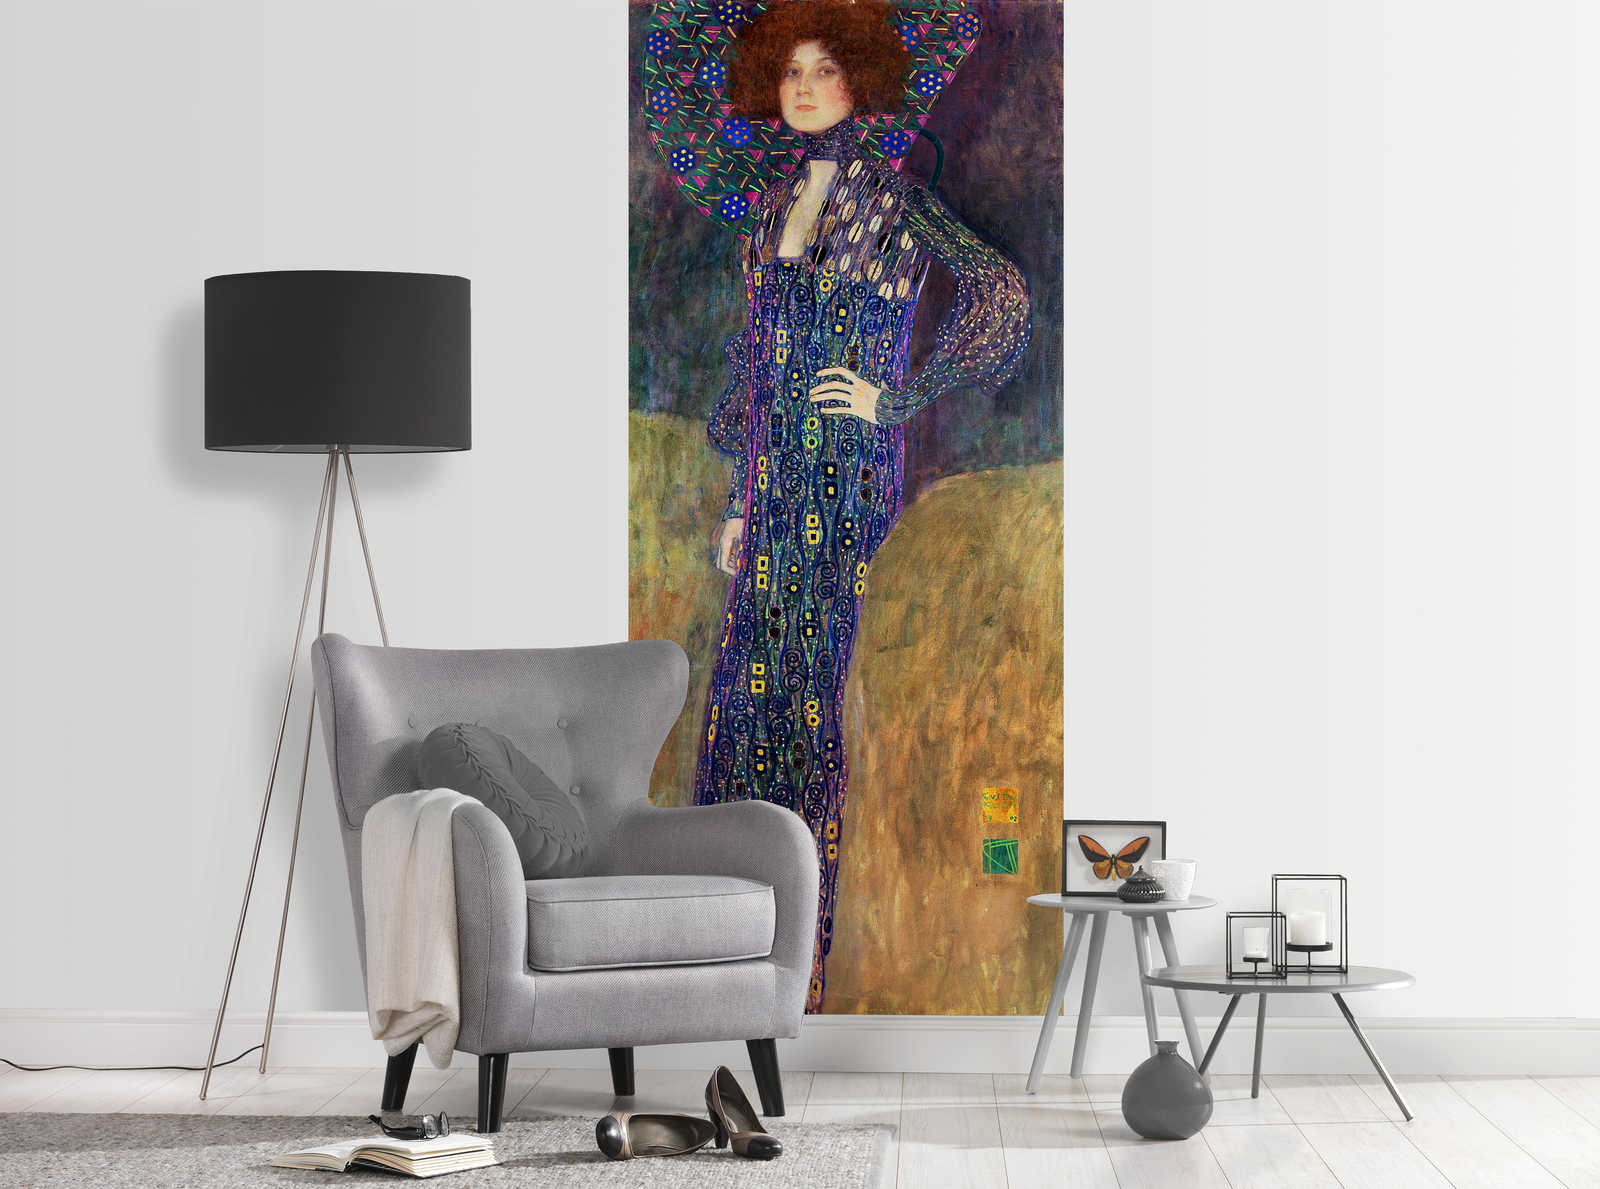             Mural "Emilie Floege" de Gustav Klimt
        